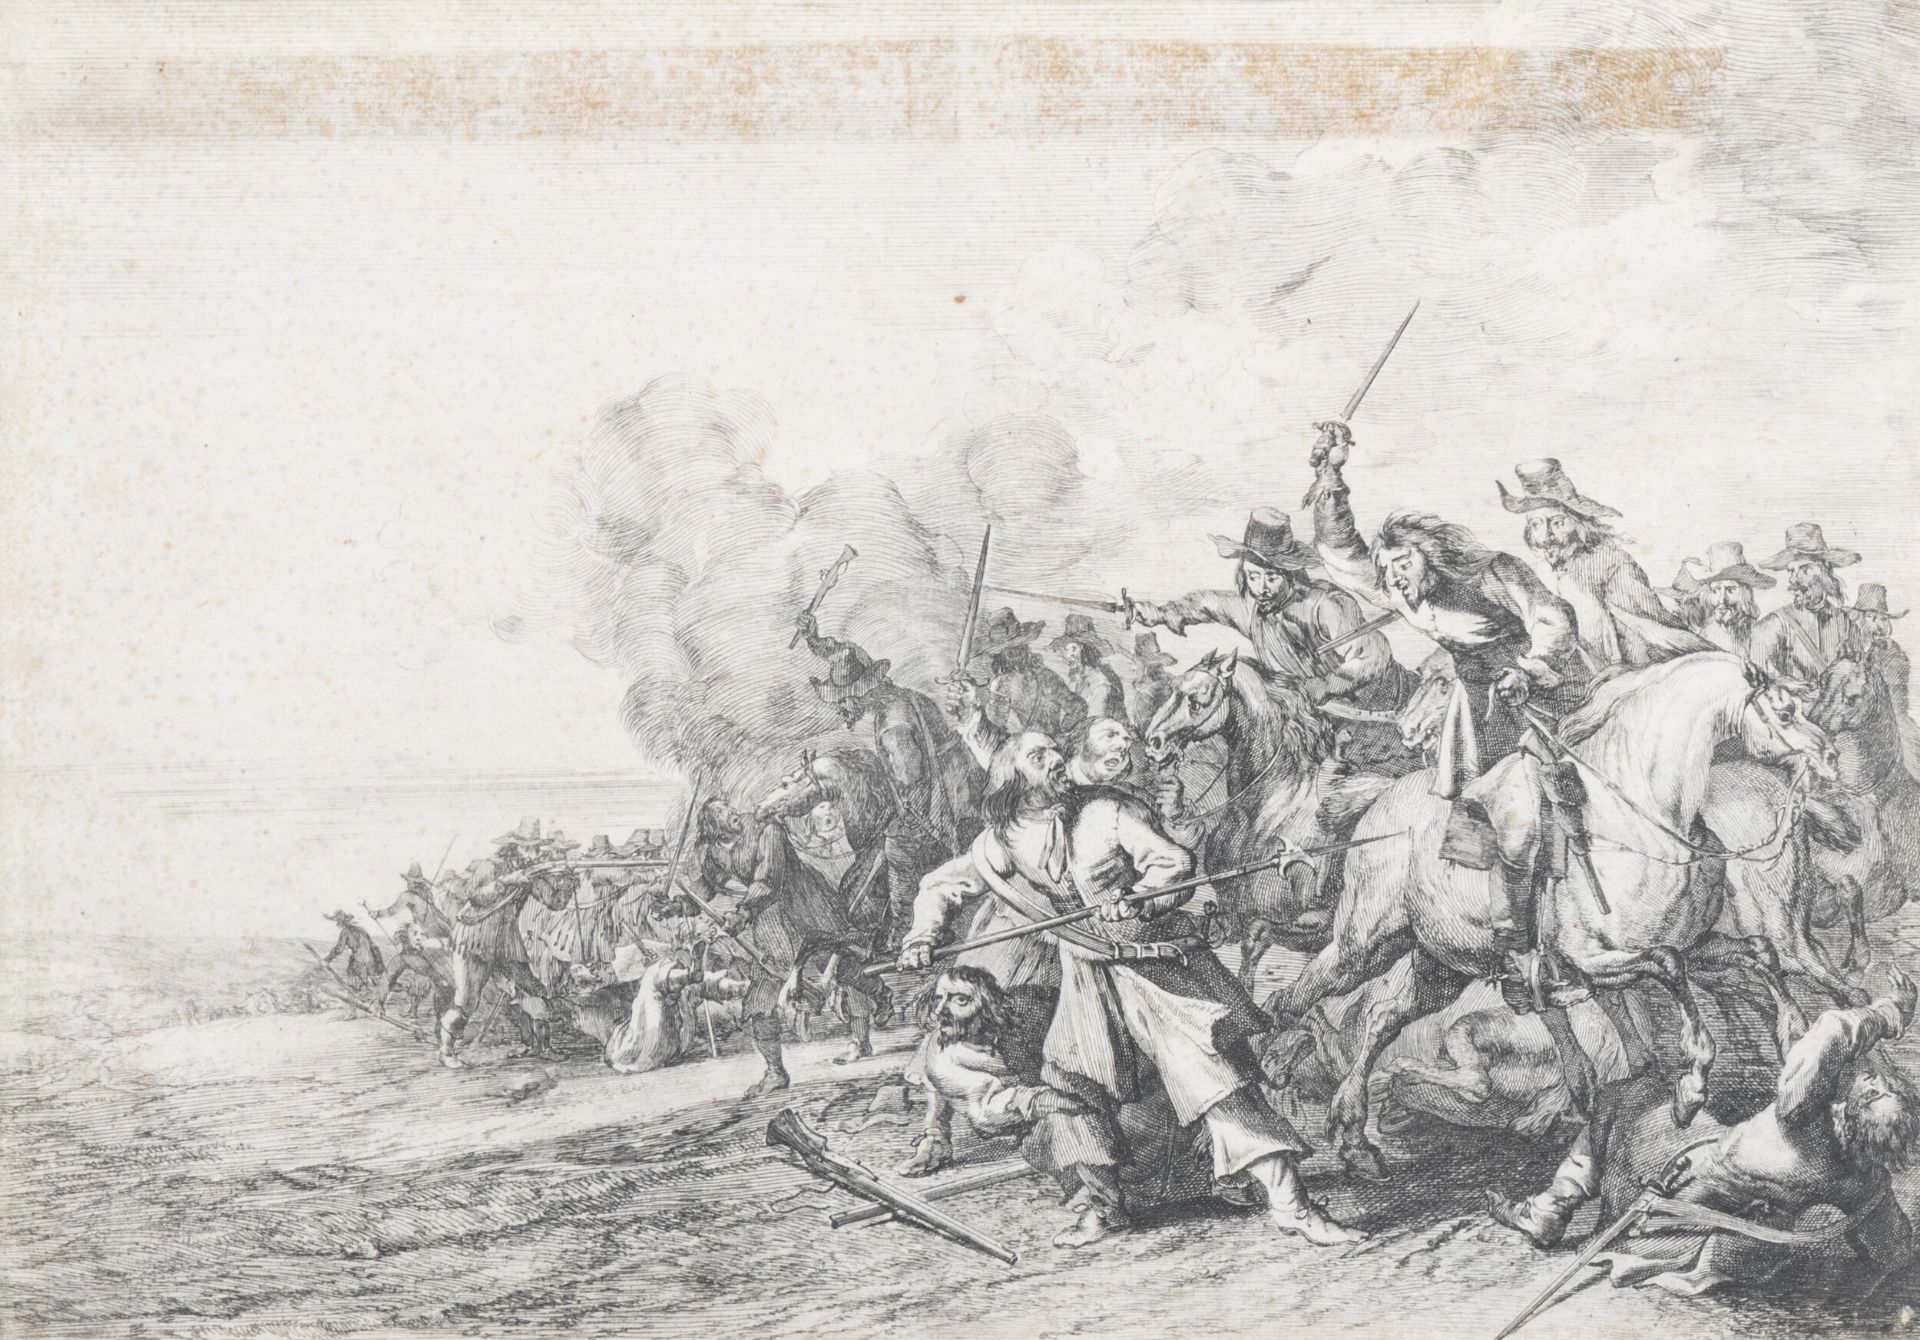 Flemish or Dutch school: The battle scene, etching, 17th C.